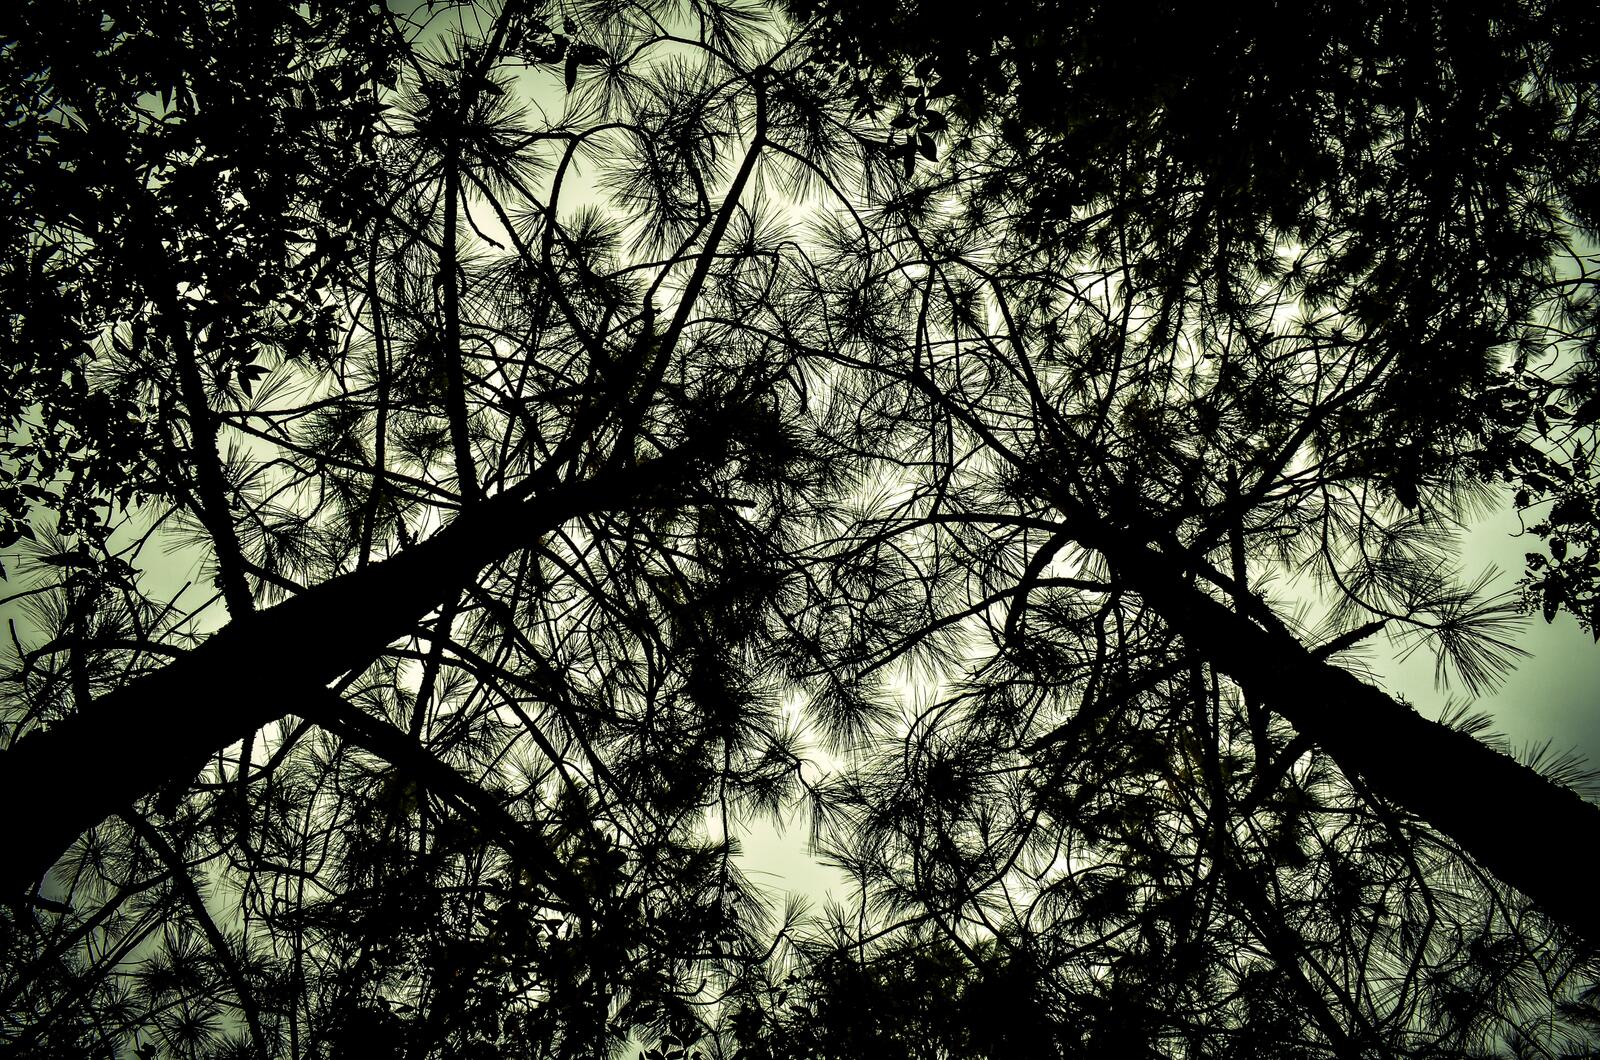 Бесплатное фото Вид снизу на ветки деревьев